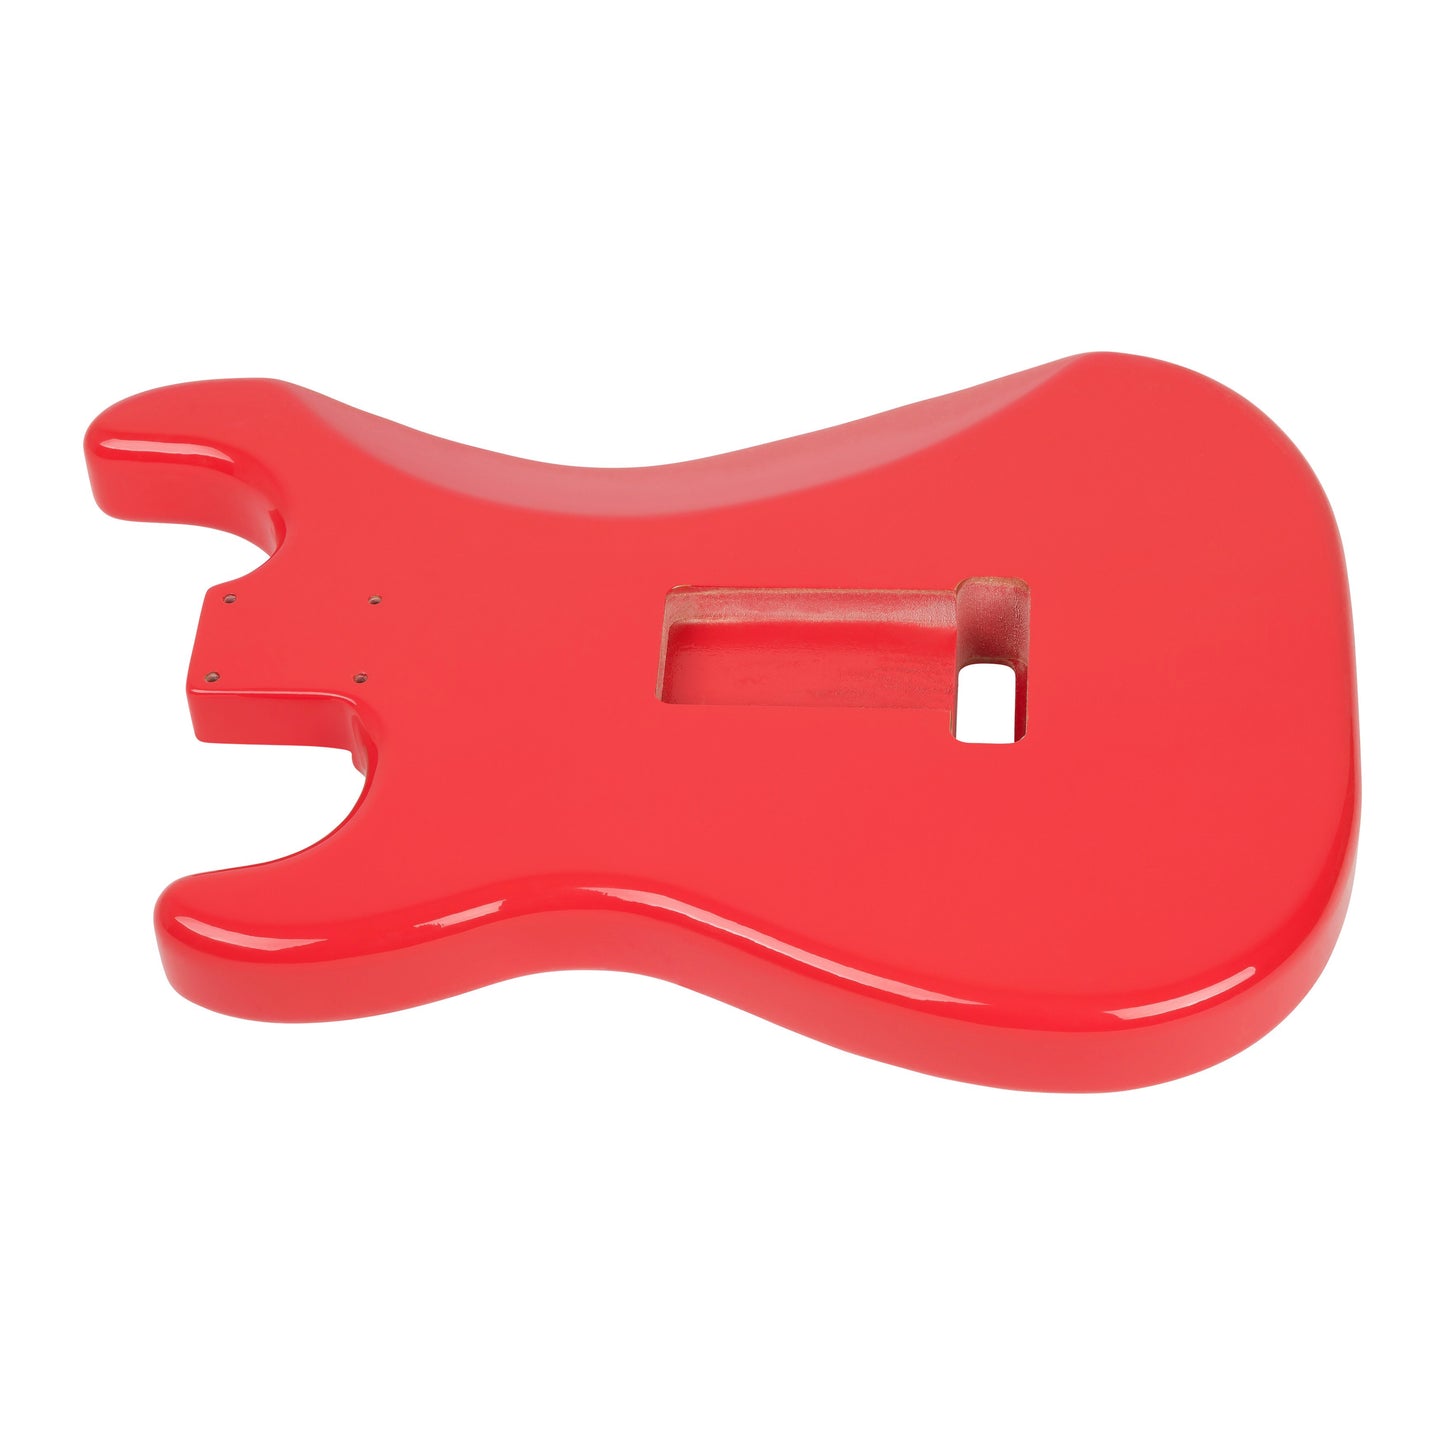 AE Guitars® S-Style Alder Replacement Guitar Body Fiesta Red Nitro